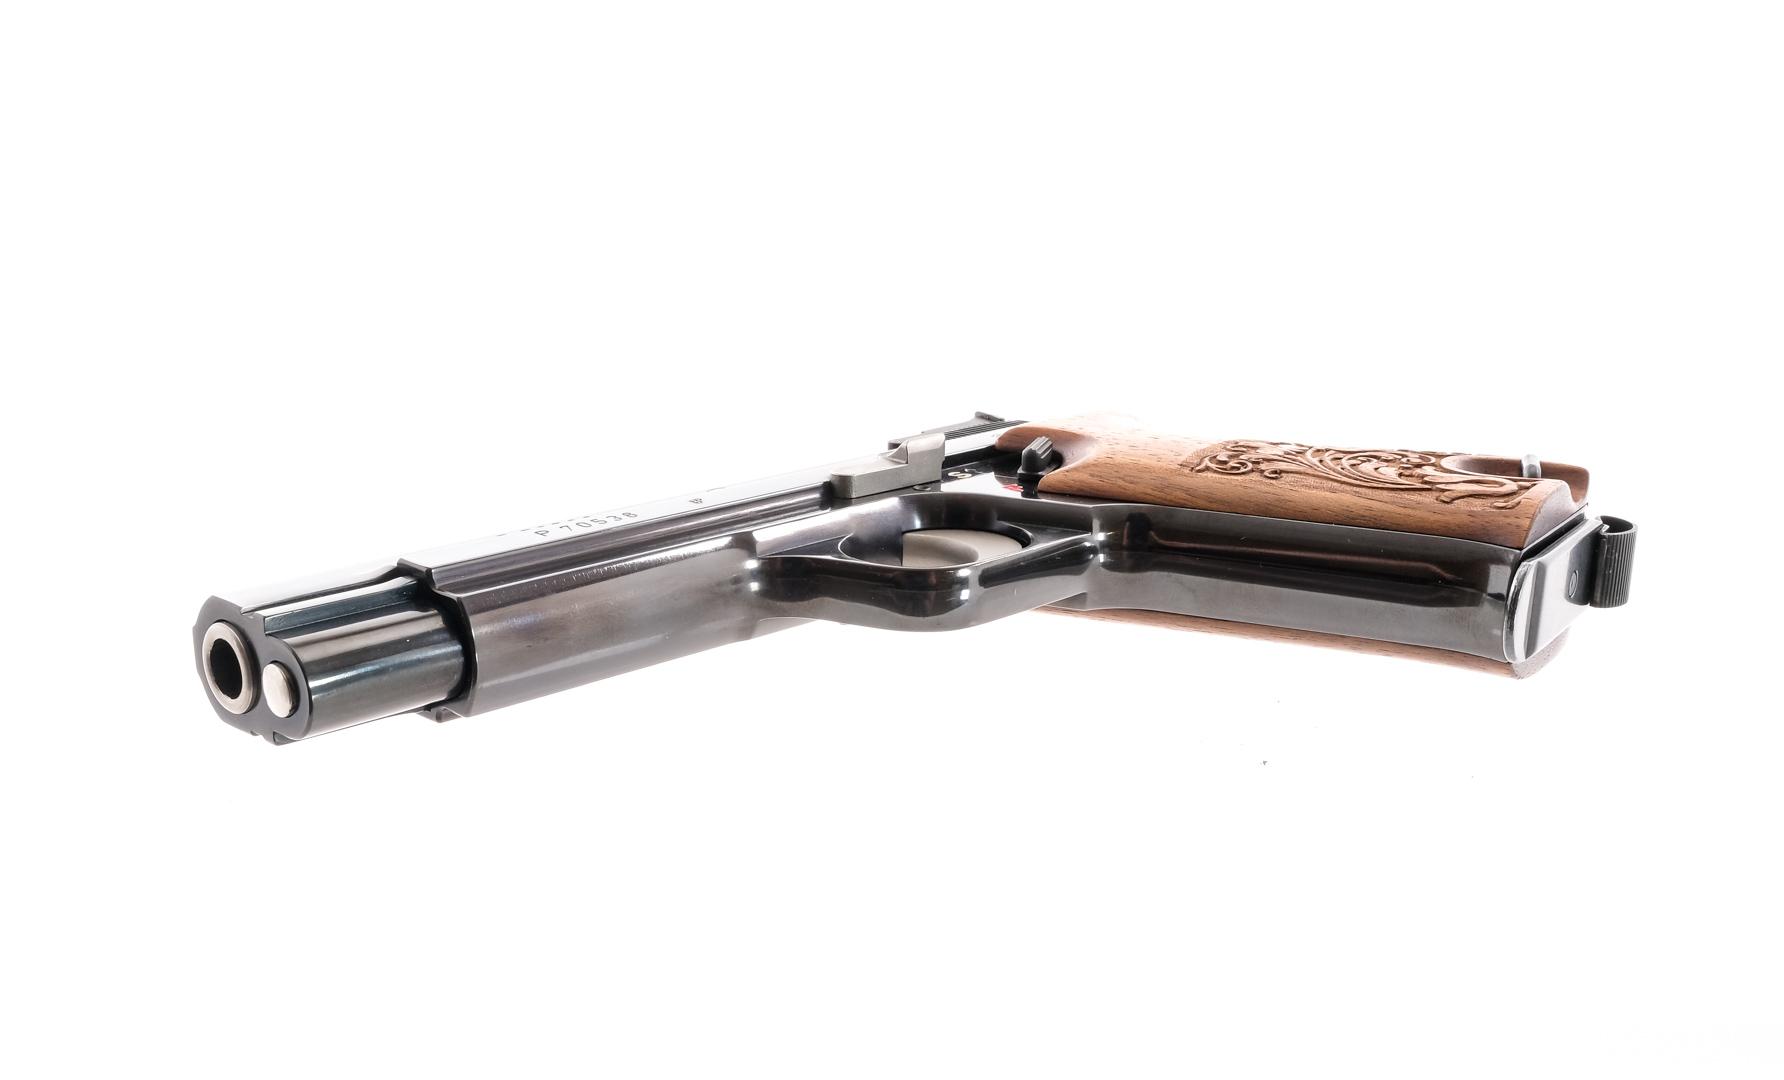 Swiss Sig P210-1 9mm .22 LR Pistol